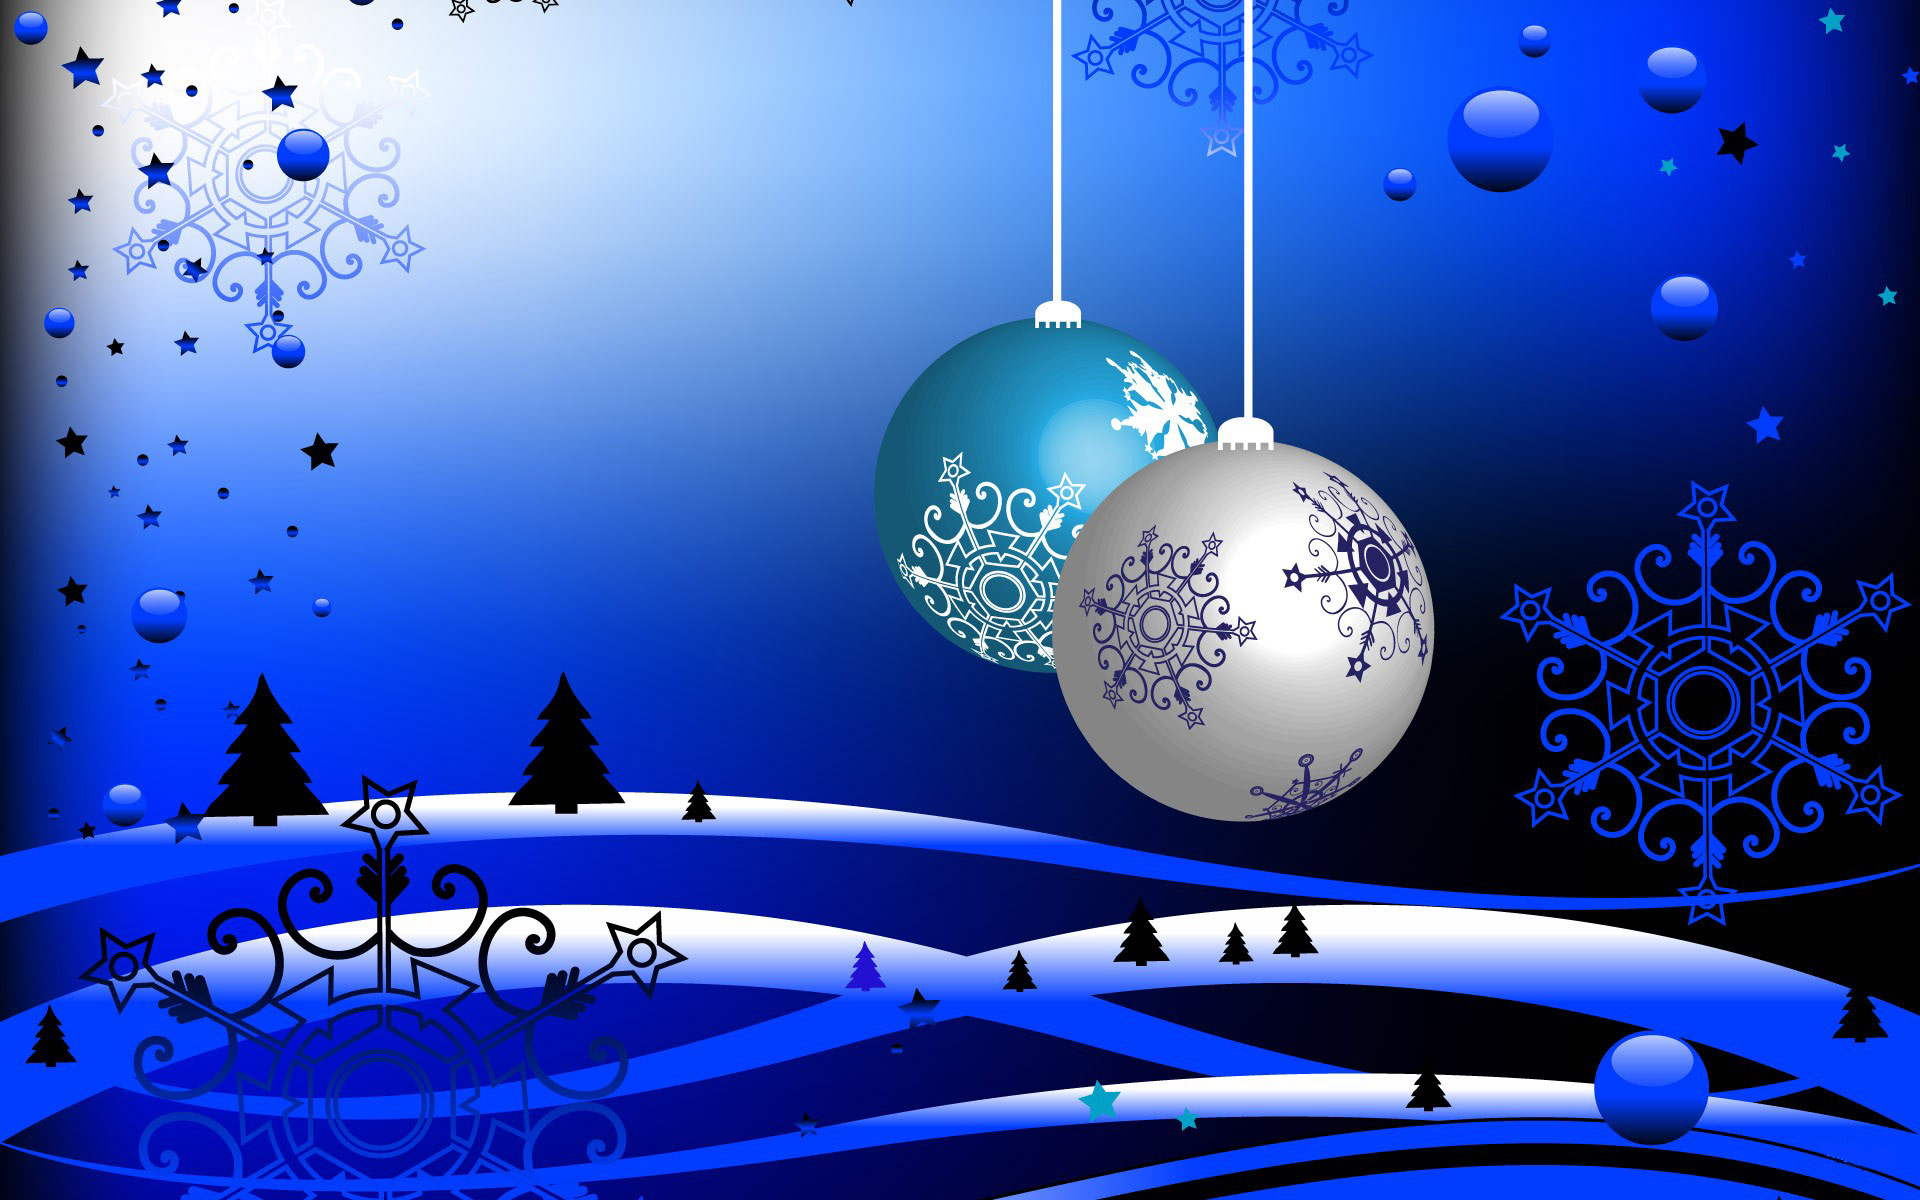 Free download Free 3d Christmas Wallpaper Full Desktop Backgrounds